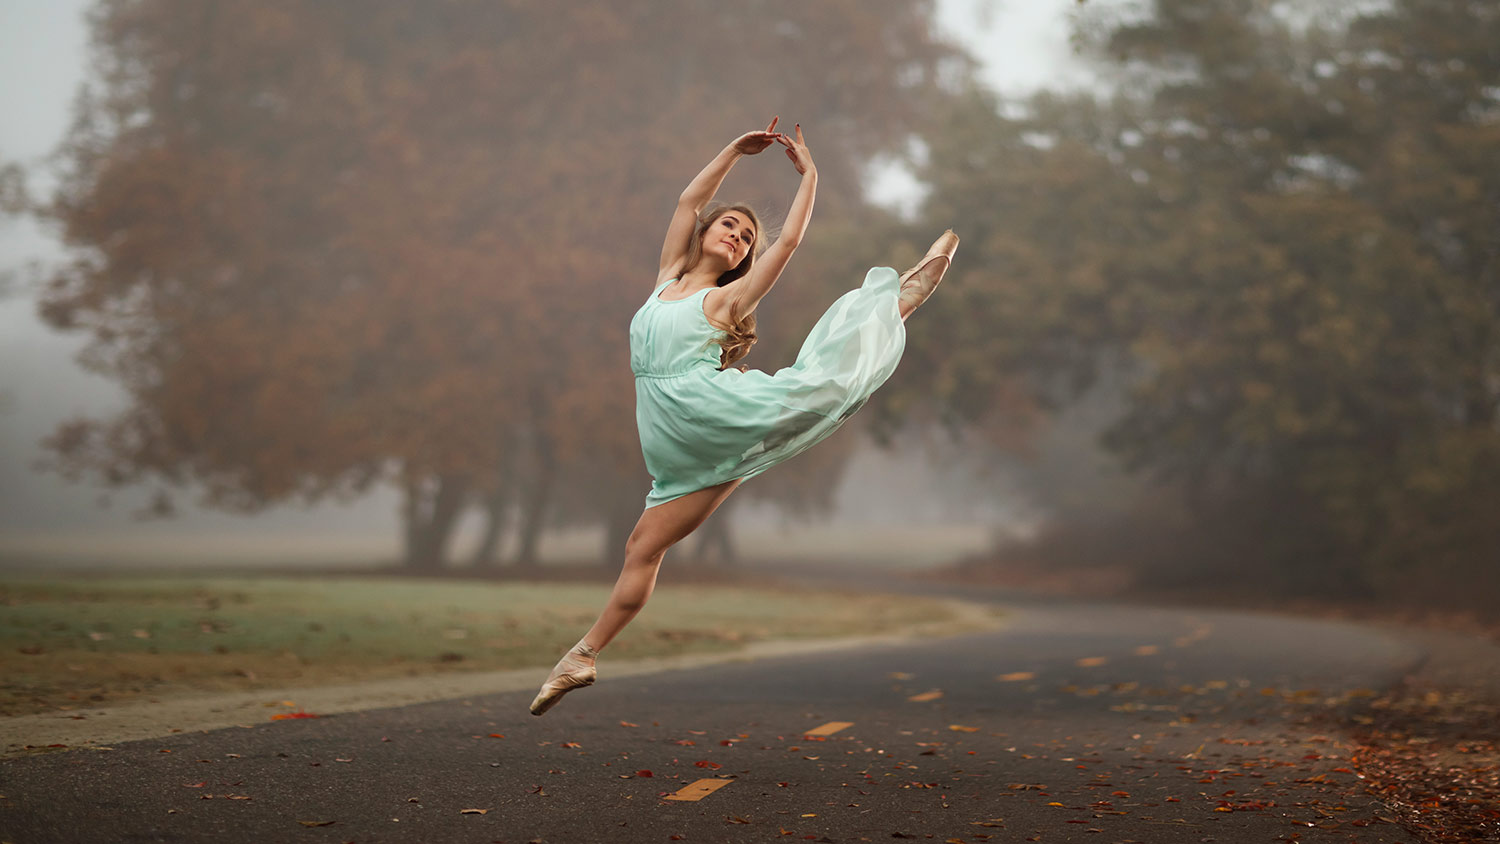 Ballet Photography Ideas Outdoor Bidun Art